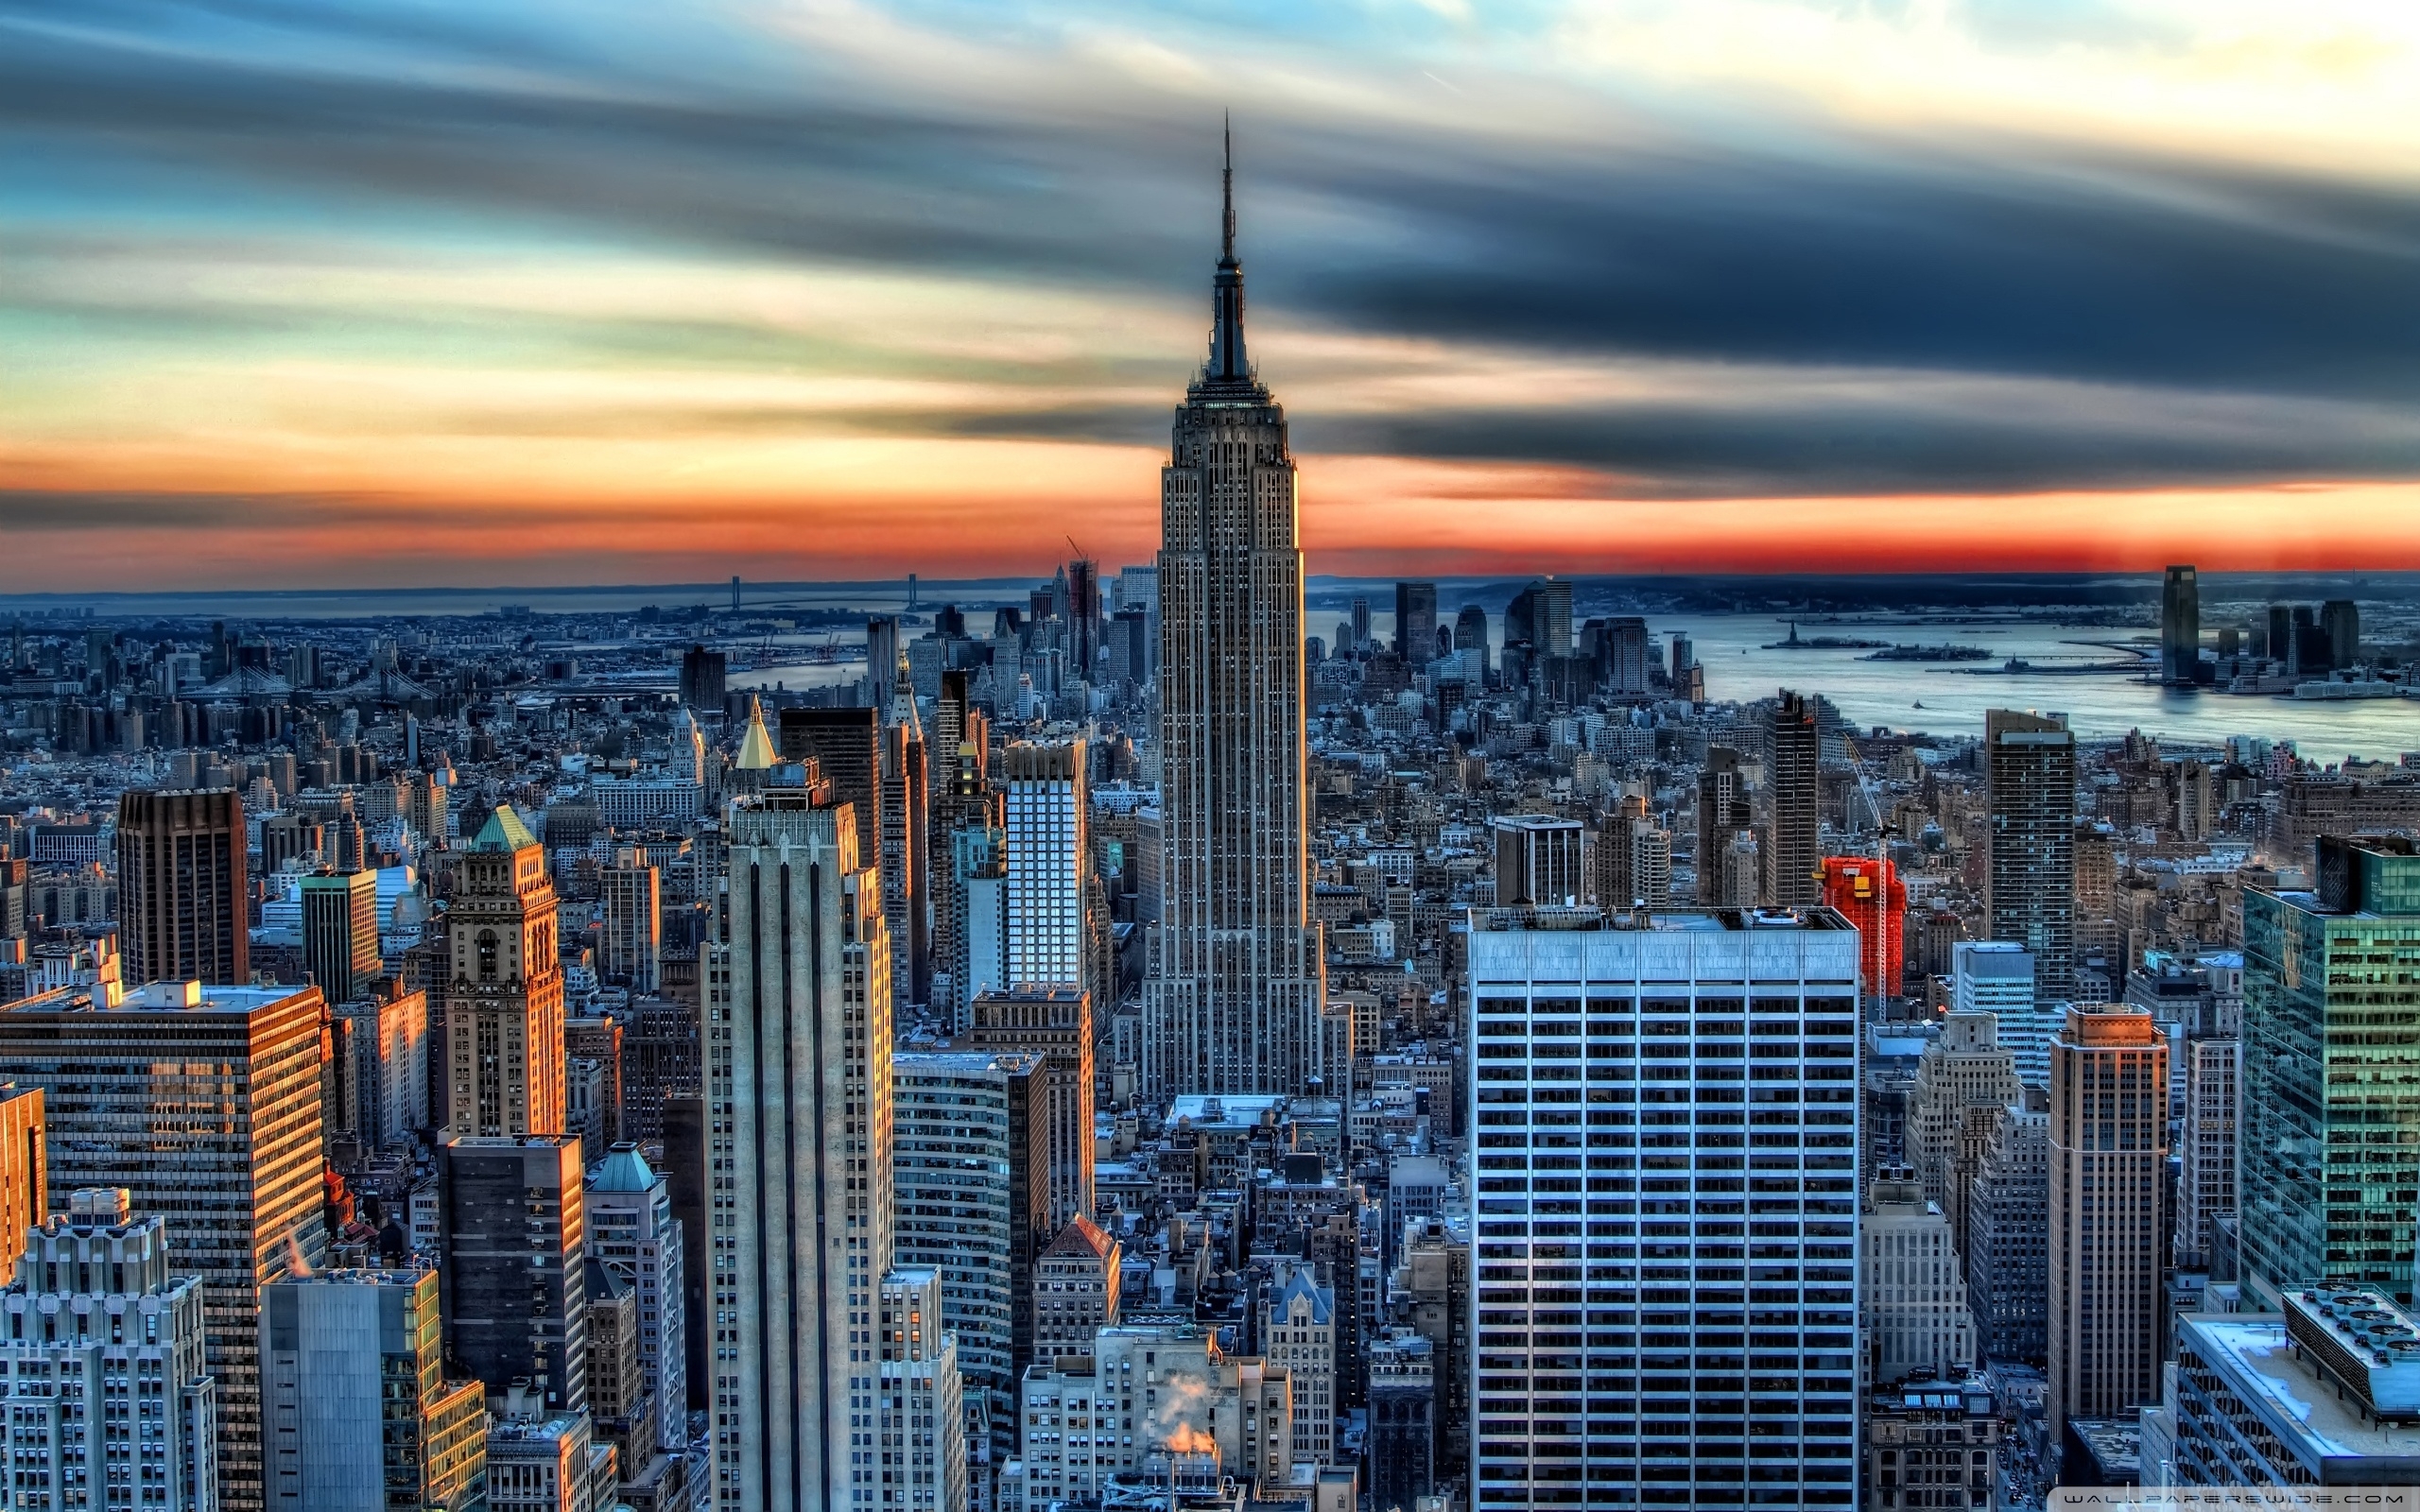 10 Best New York Building Wallpaper FULL HD 1920×1080 For PC Background